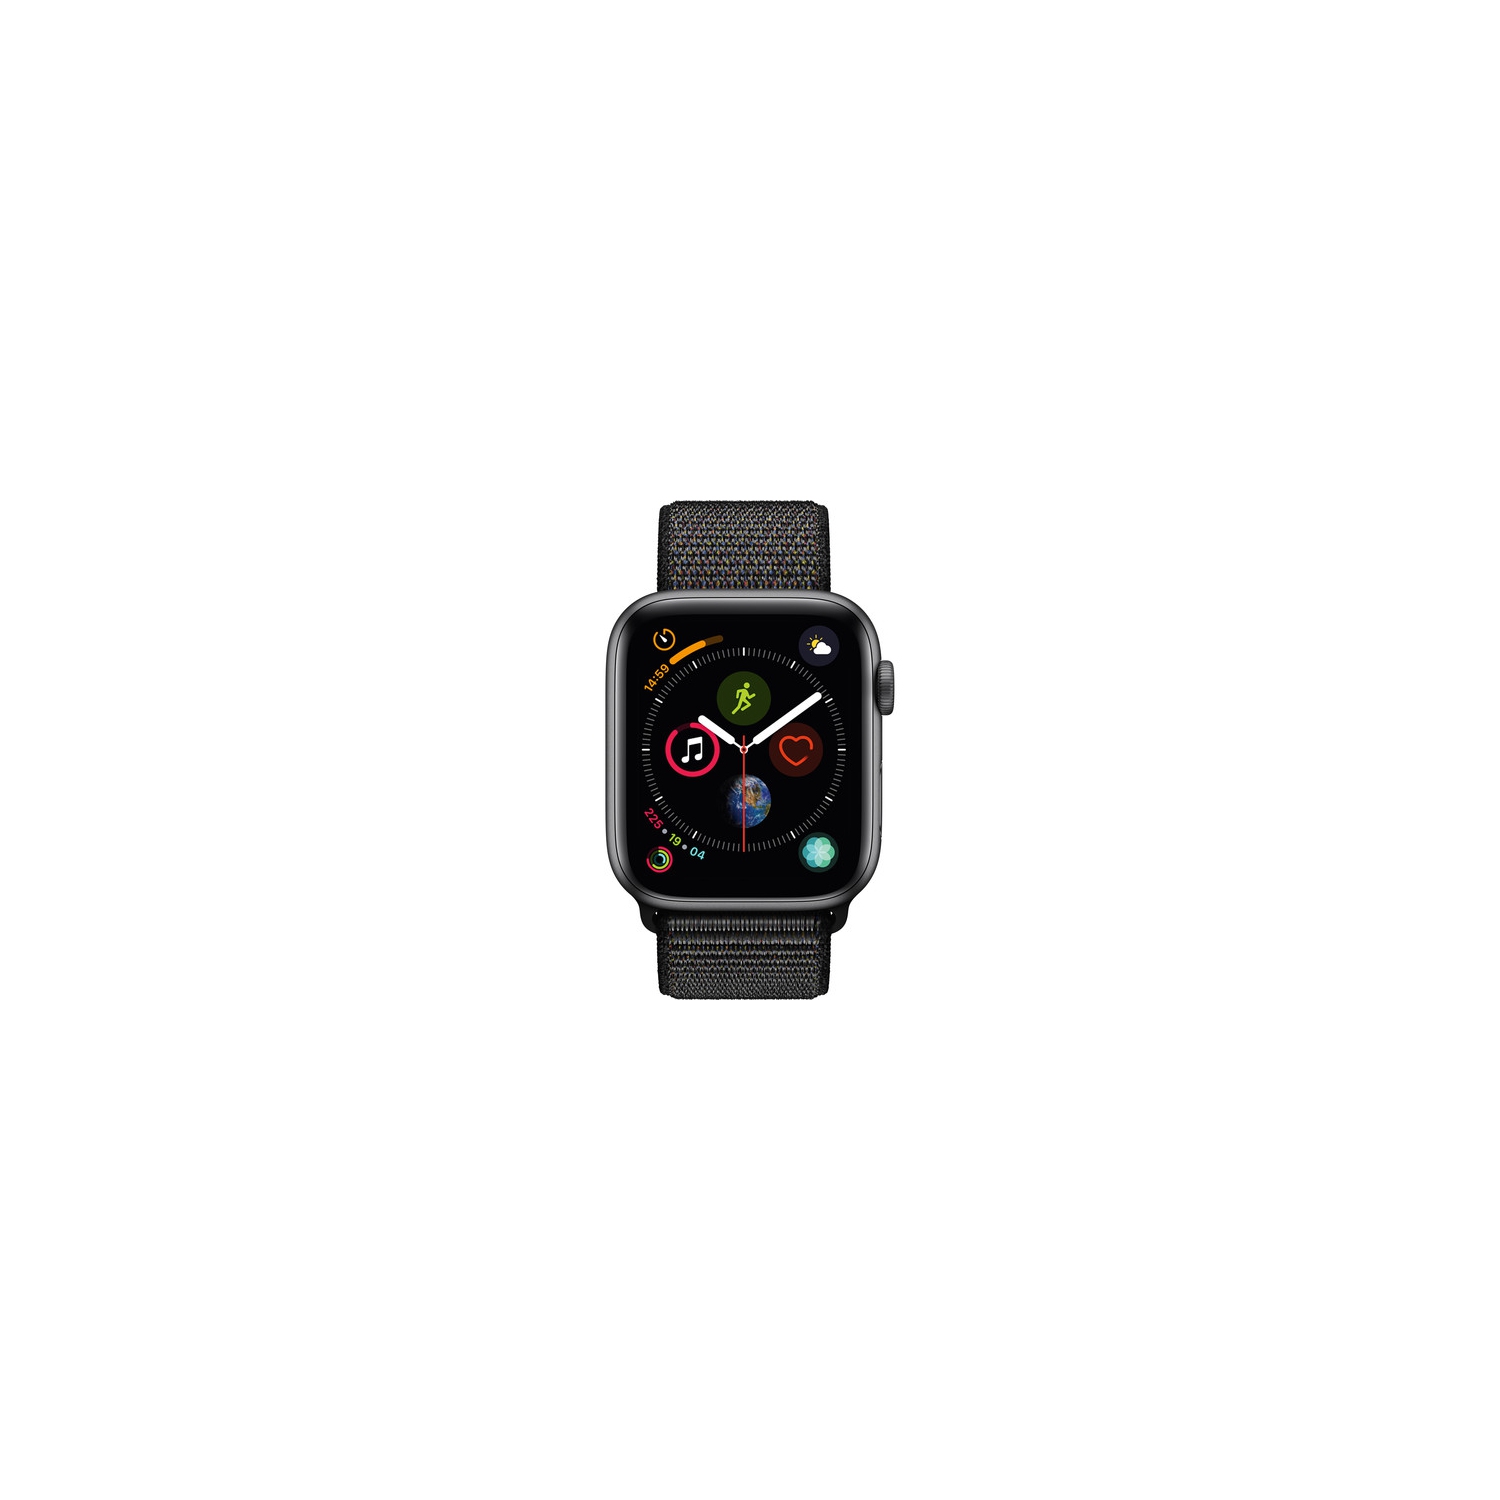 Apple Watch Series 4, mm, GPS + Cellular, Space Grey Aluminium